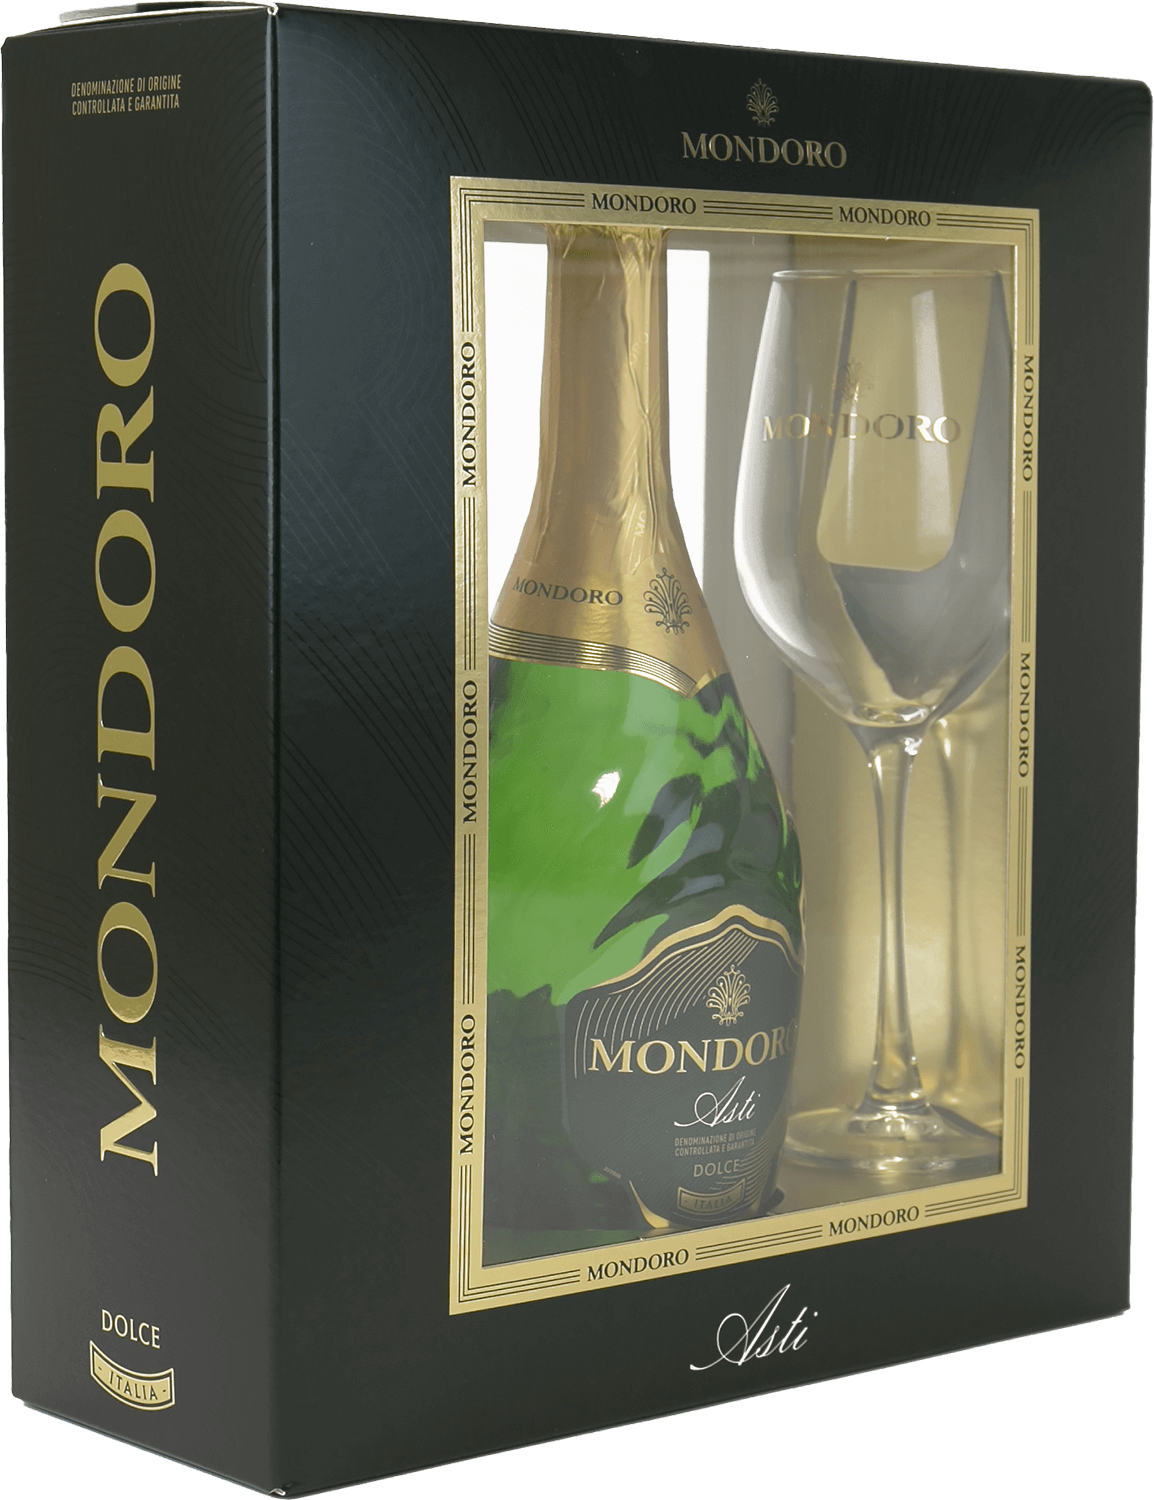 Mondoro Asti DOCG Campari (gift box with 2 glasses) mondoro prosecco doc campari gift box with glass